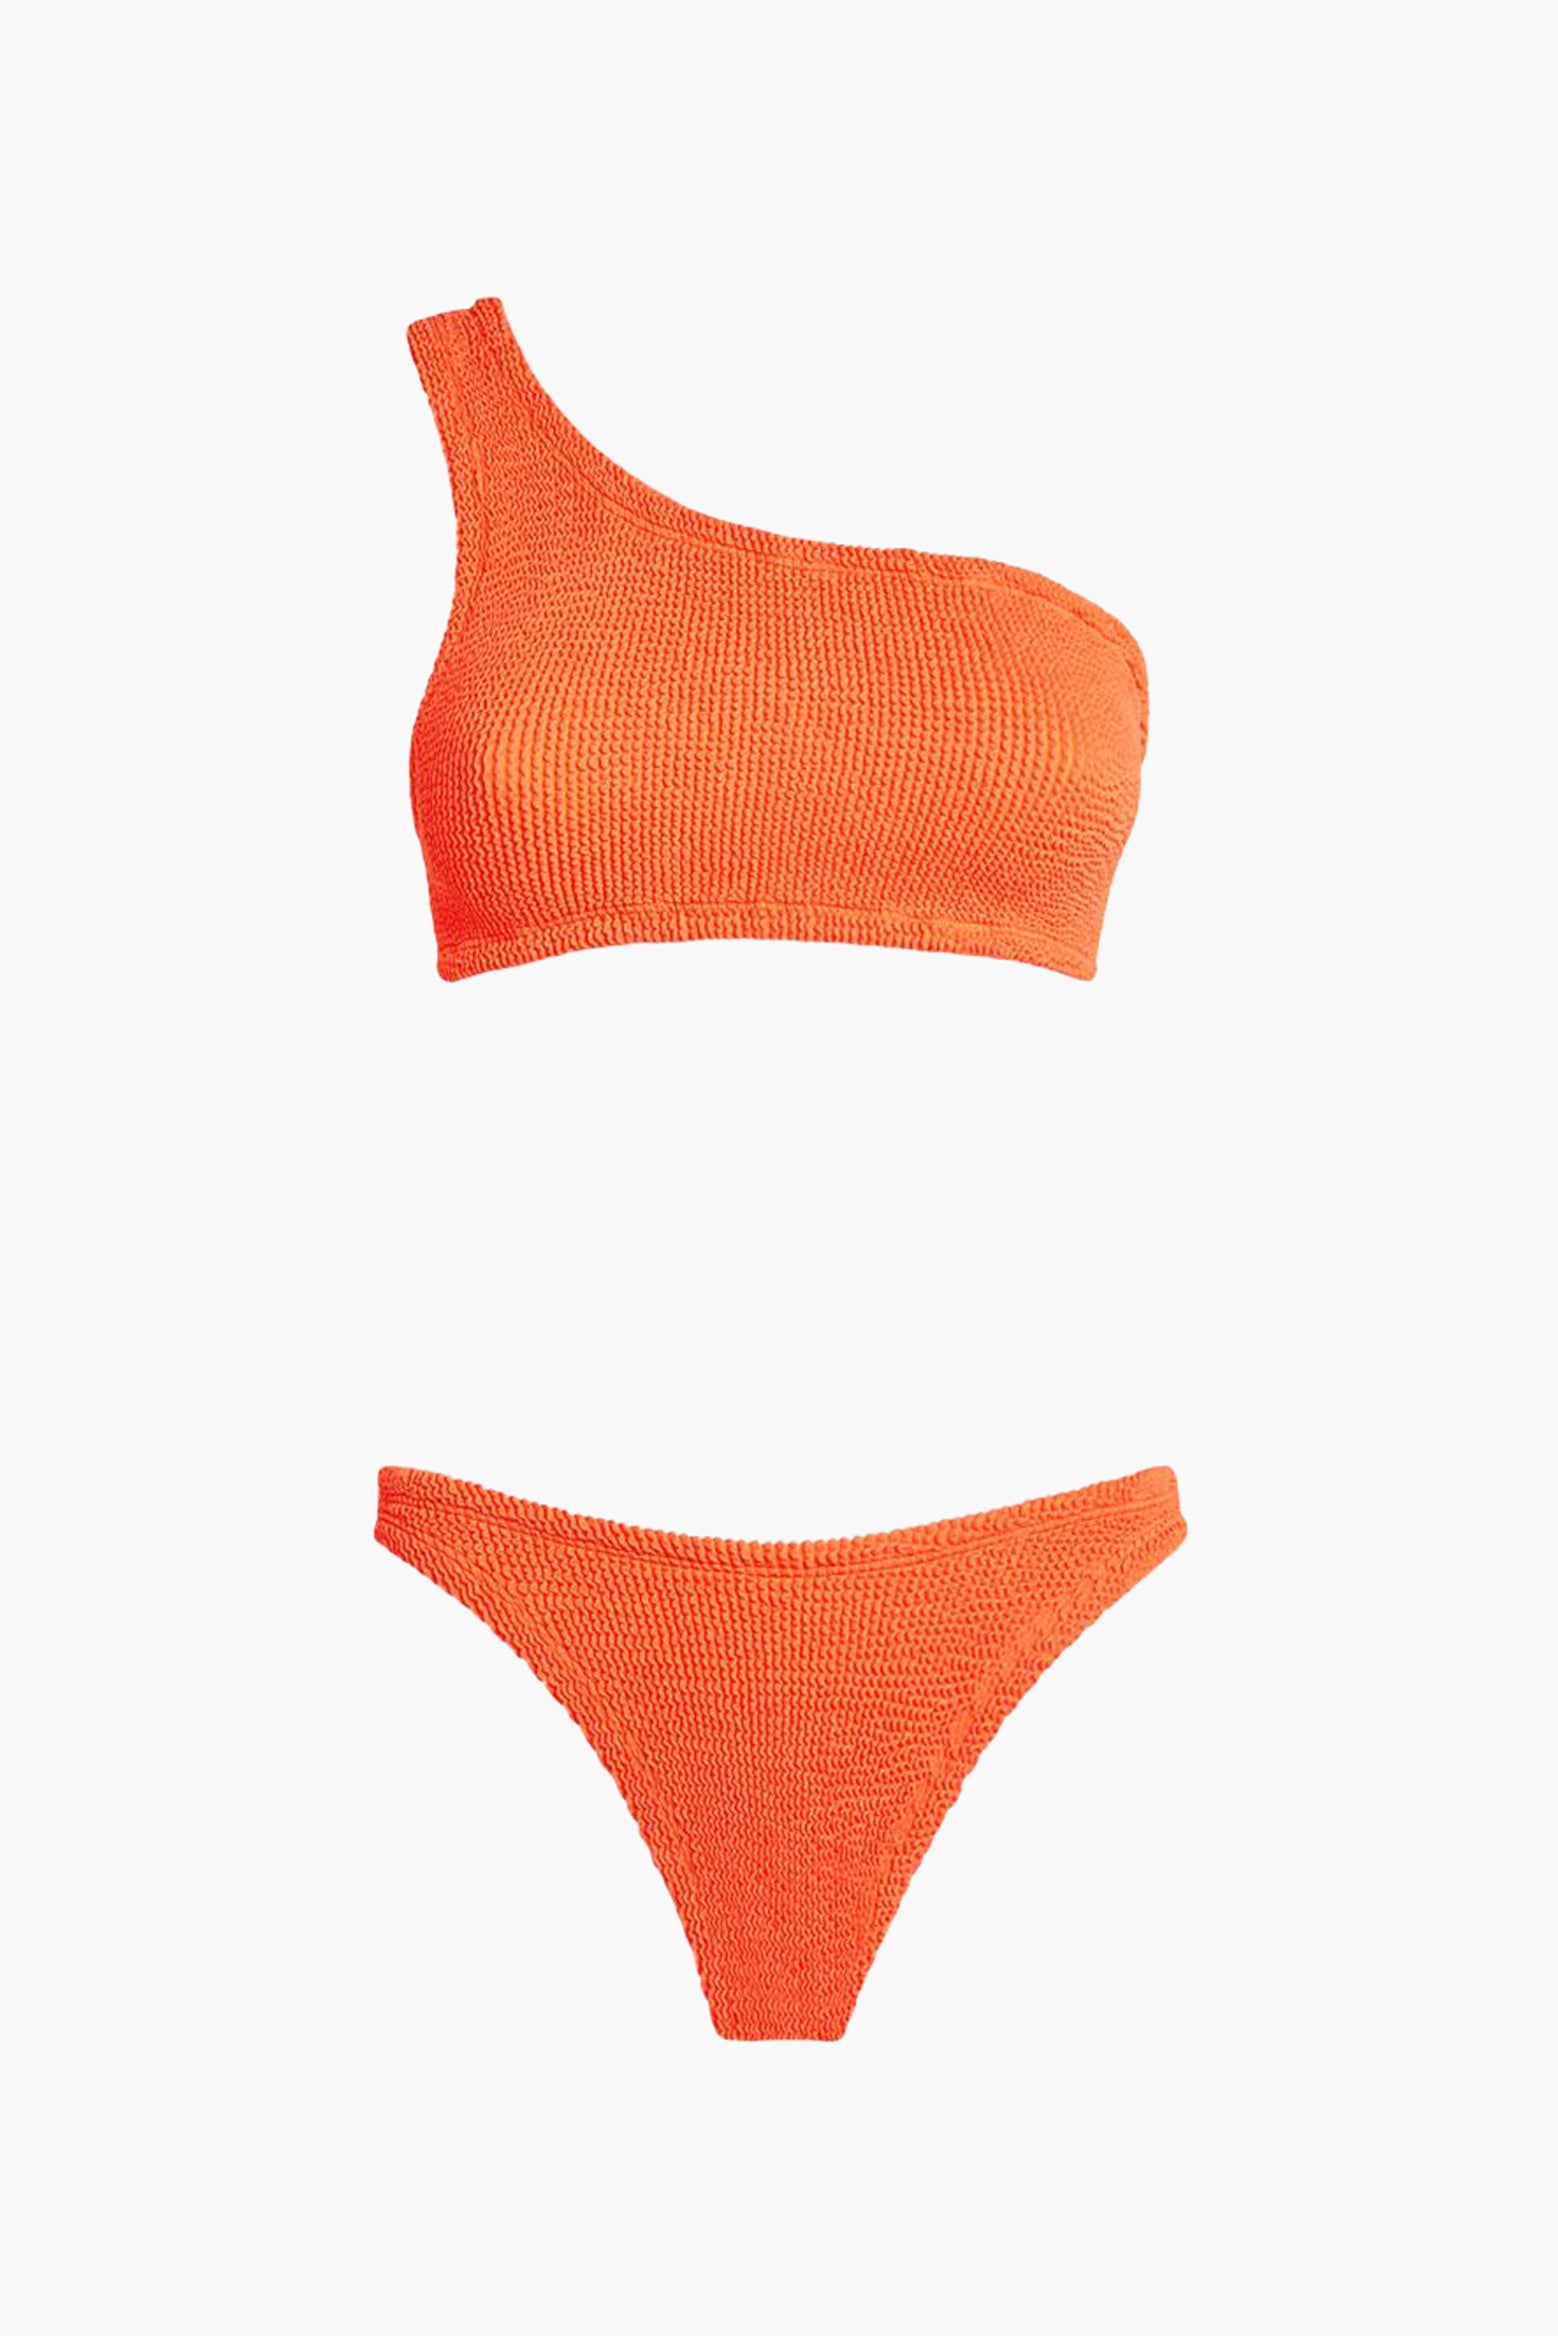 The Hunza G Nancy Bikini in Orange available at The New Trend Australia.